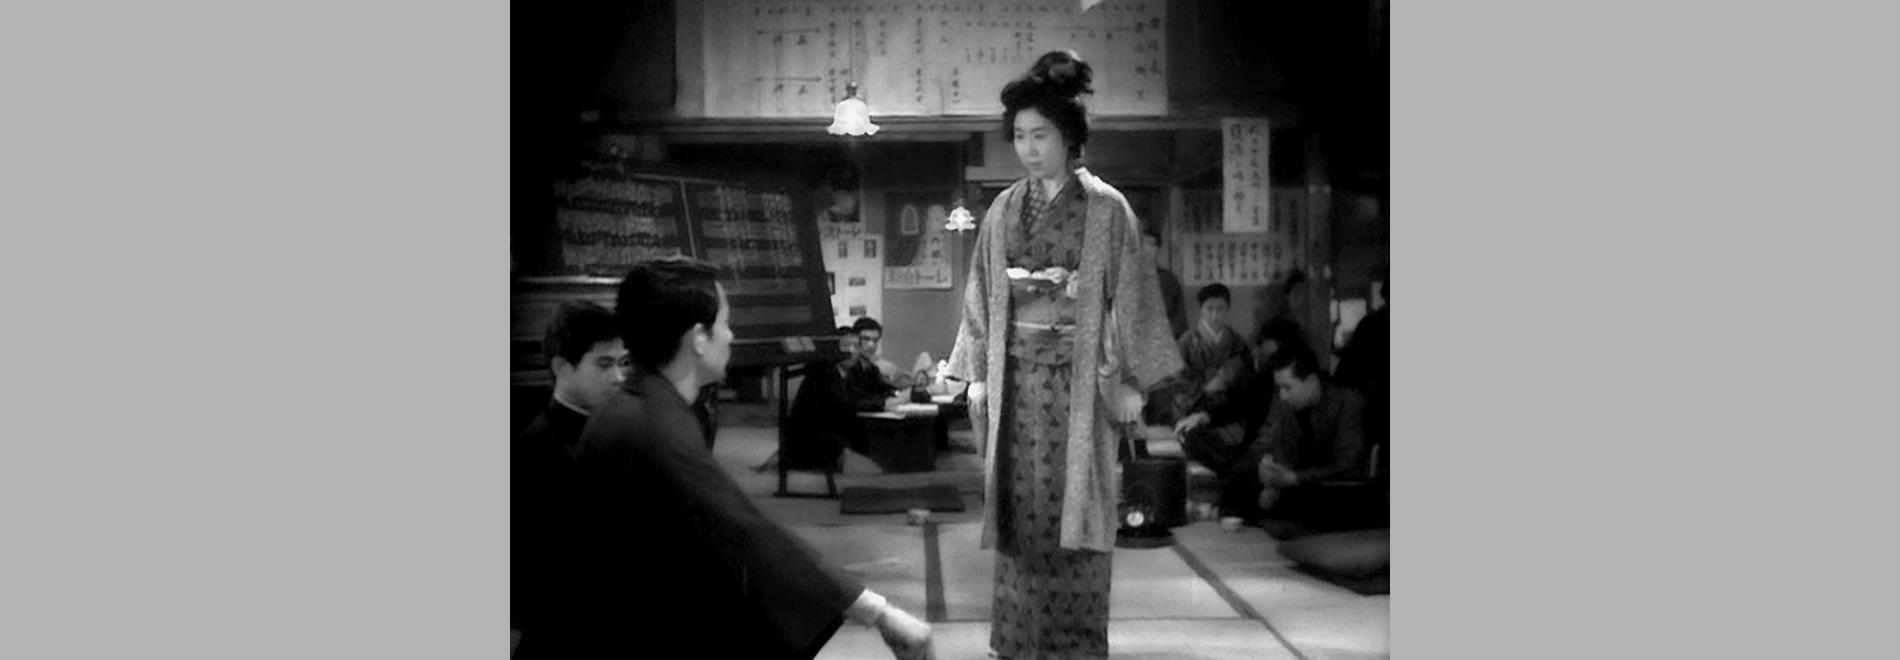 Joyû Sumako no koi / L'amor de l'actriu Sumako (Kenji Mizoguchi, 1947)